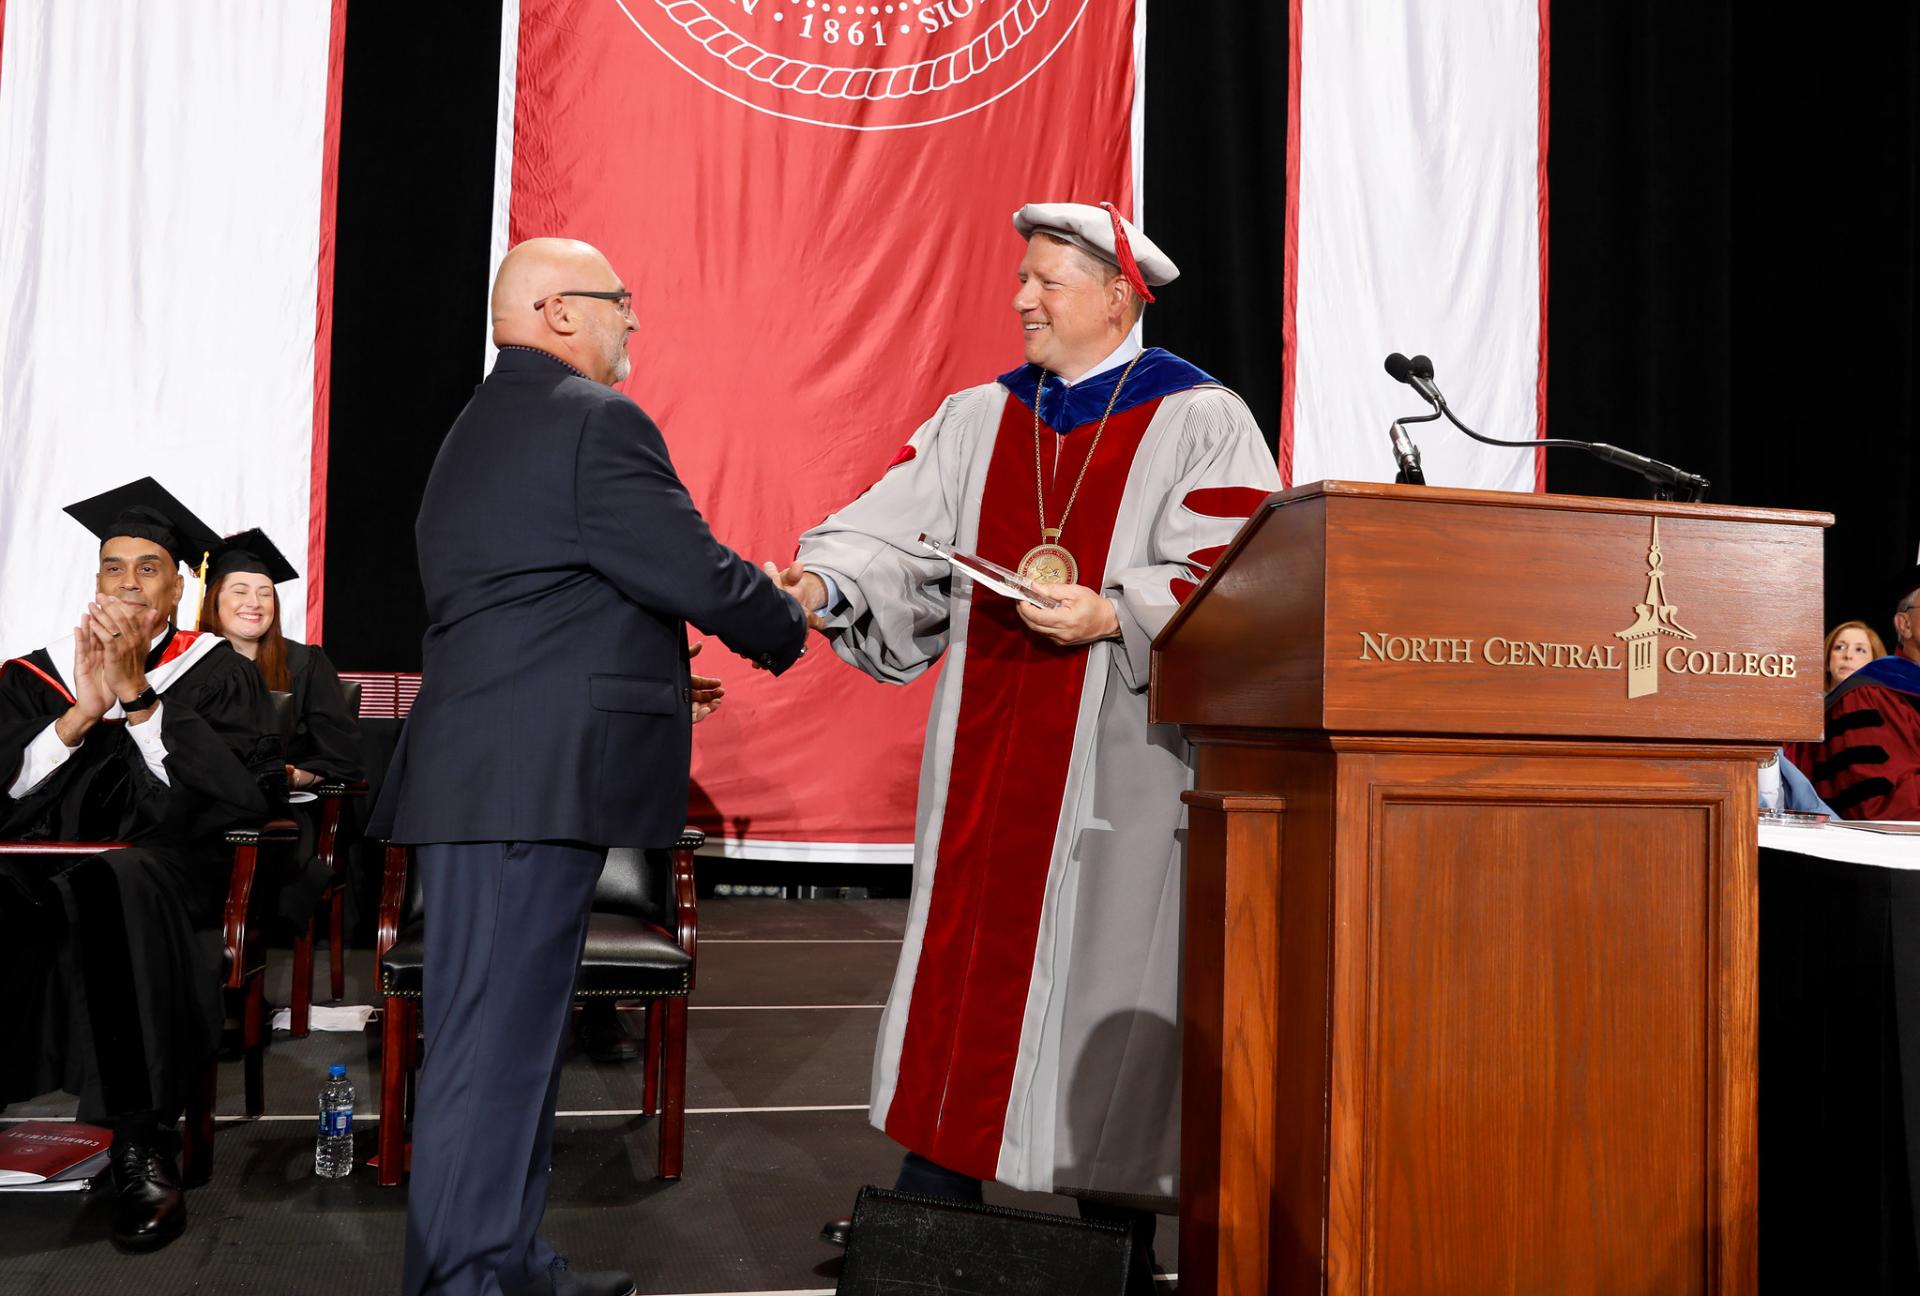 North Central College White Award winner Frank Gramarosso with President Troy Hammond.